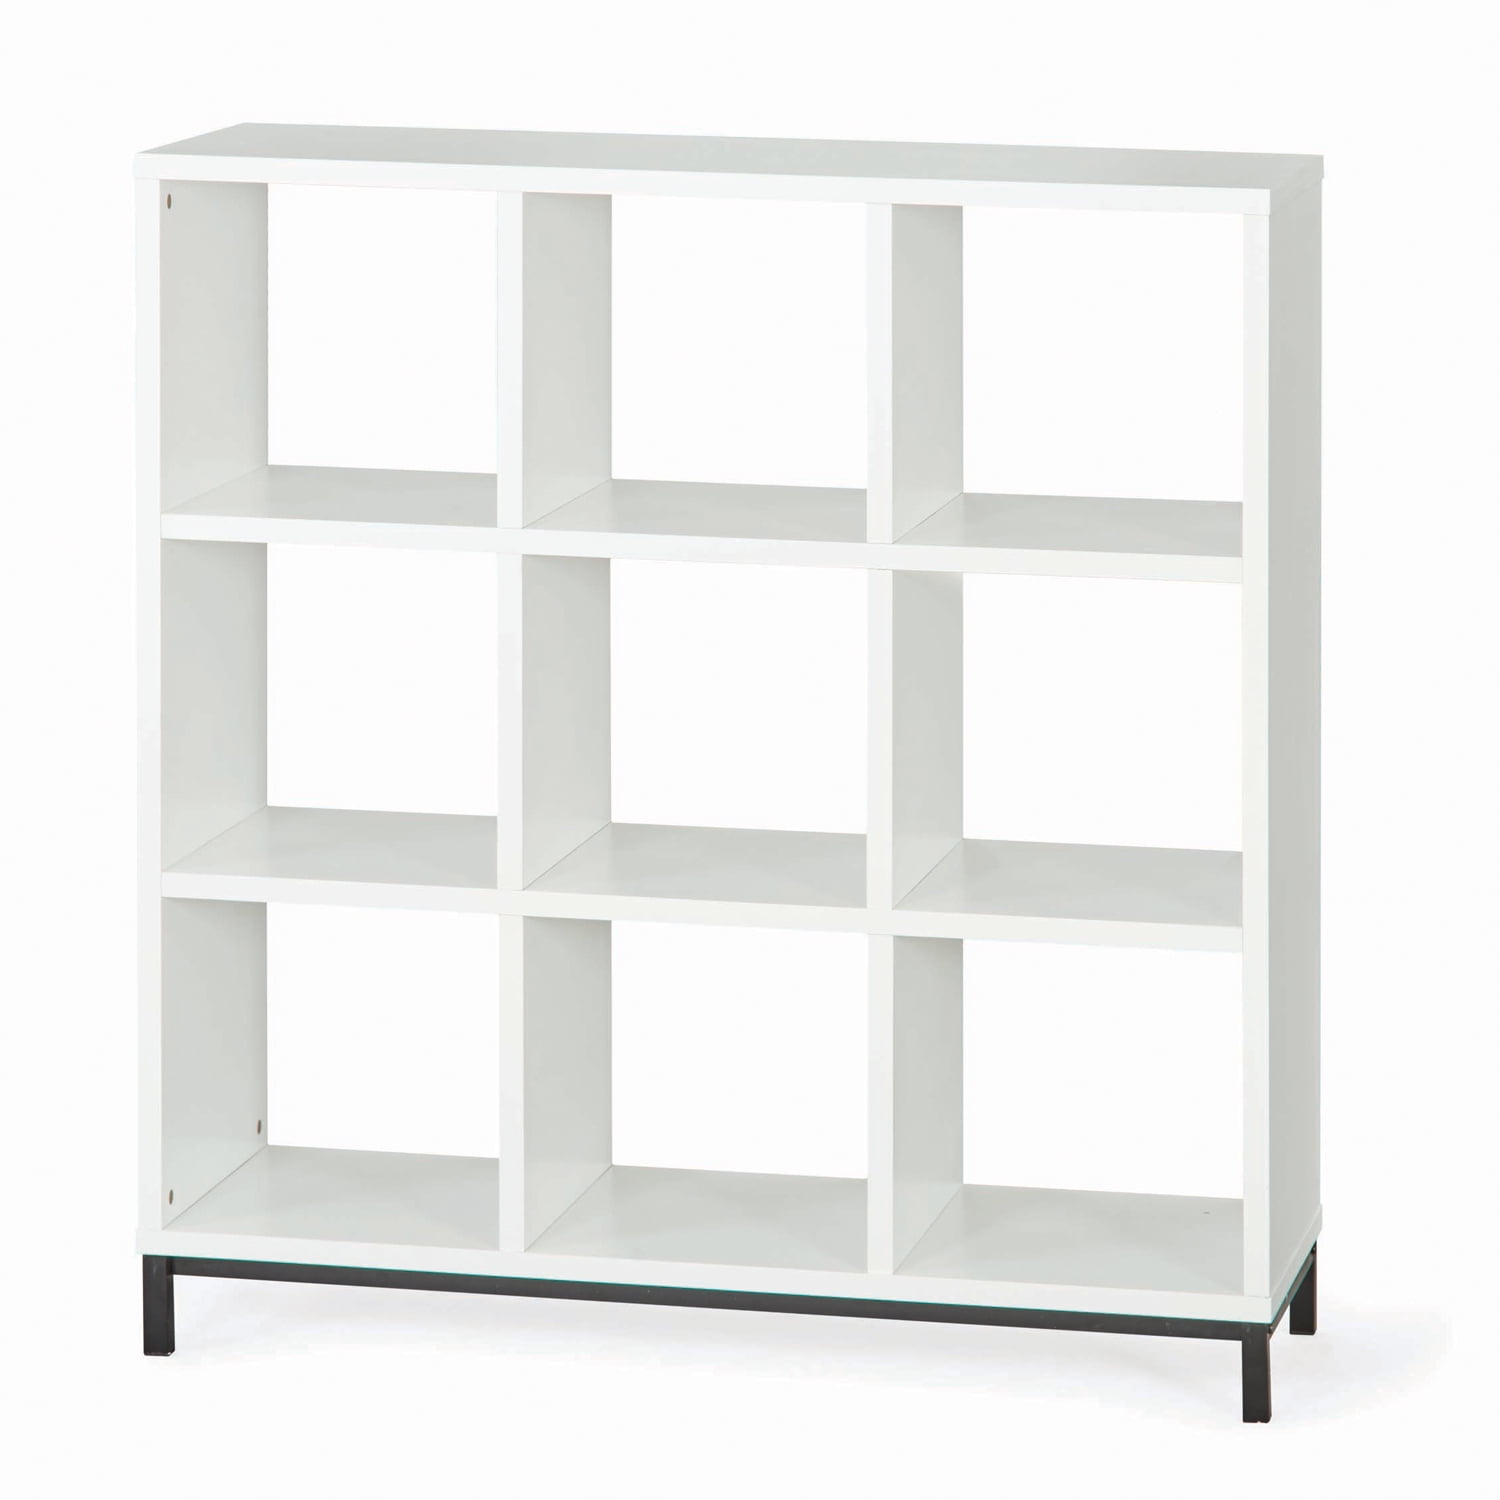 9-Cube BHG Bookcase Bookshelf Open Storage Shelves Organizer Black 